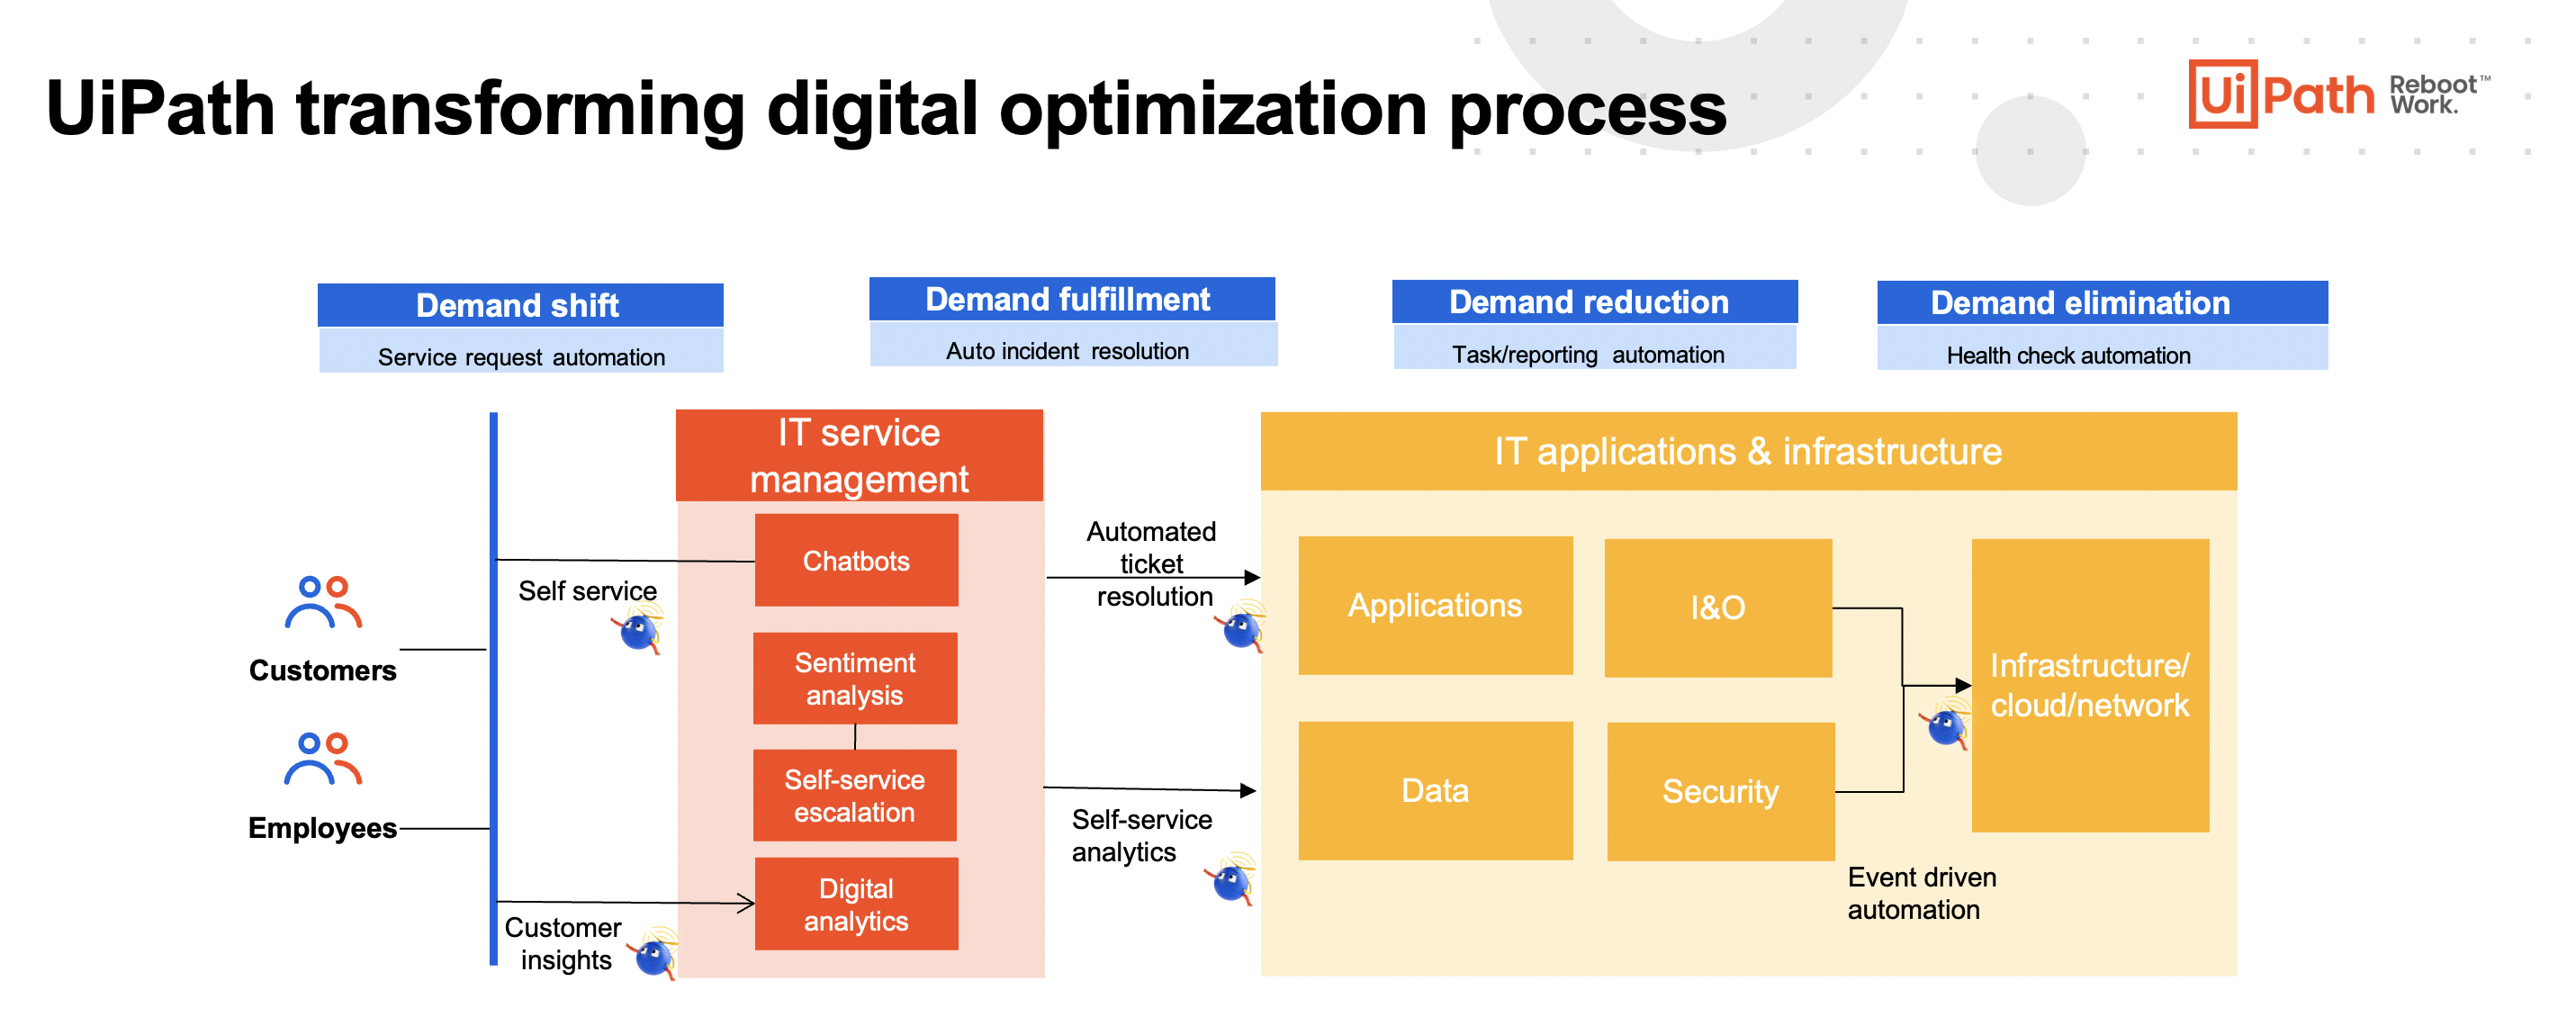 uipath transforming digital optimization process